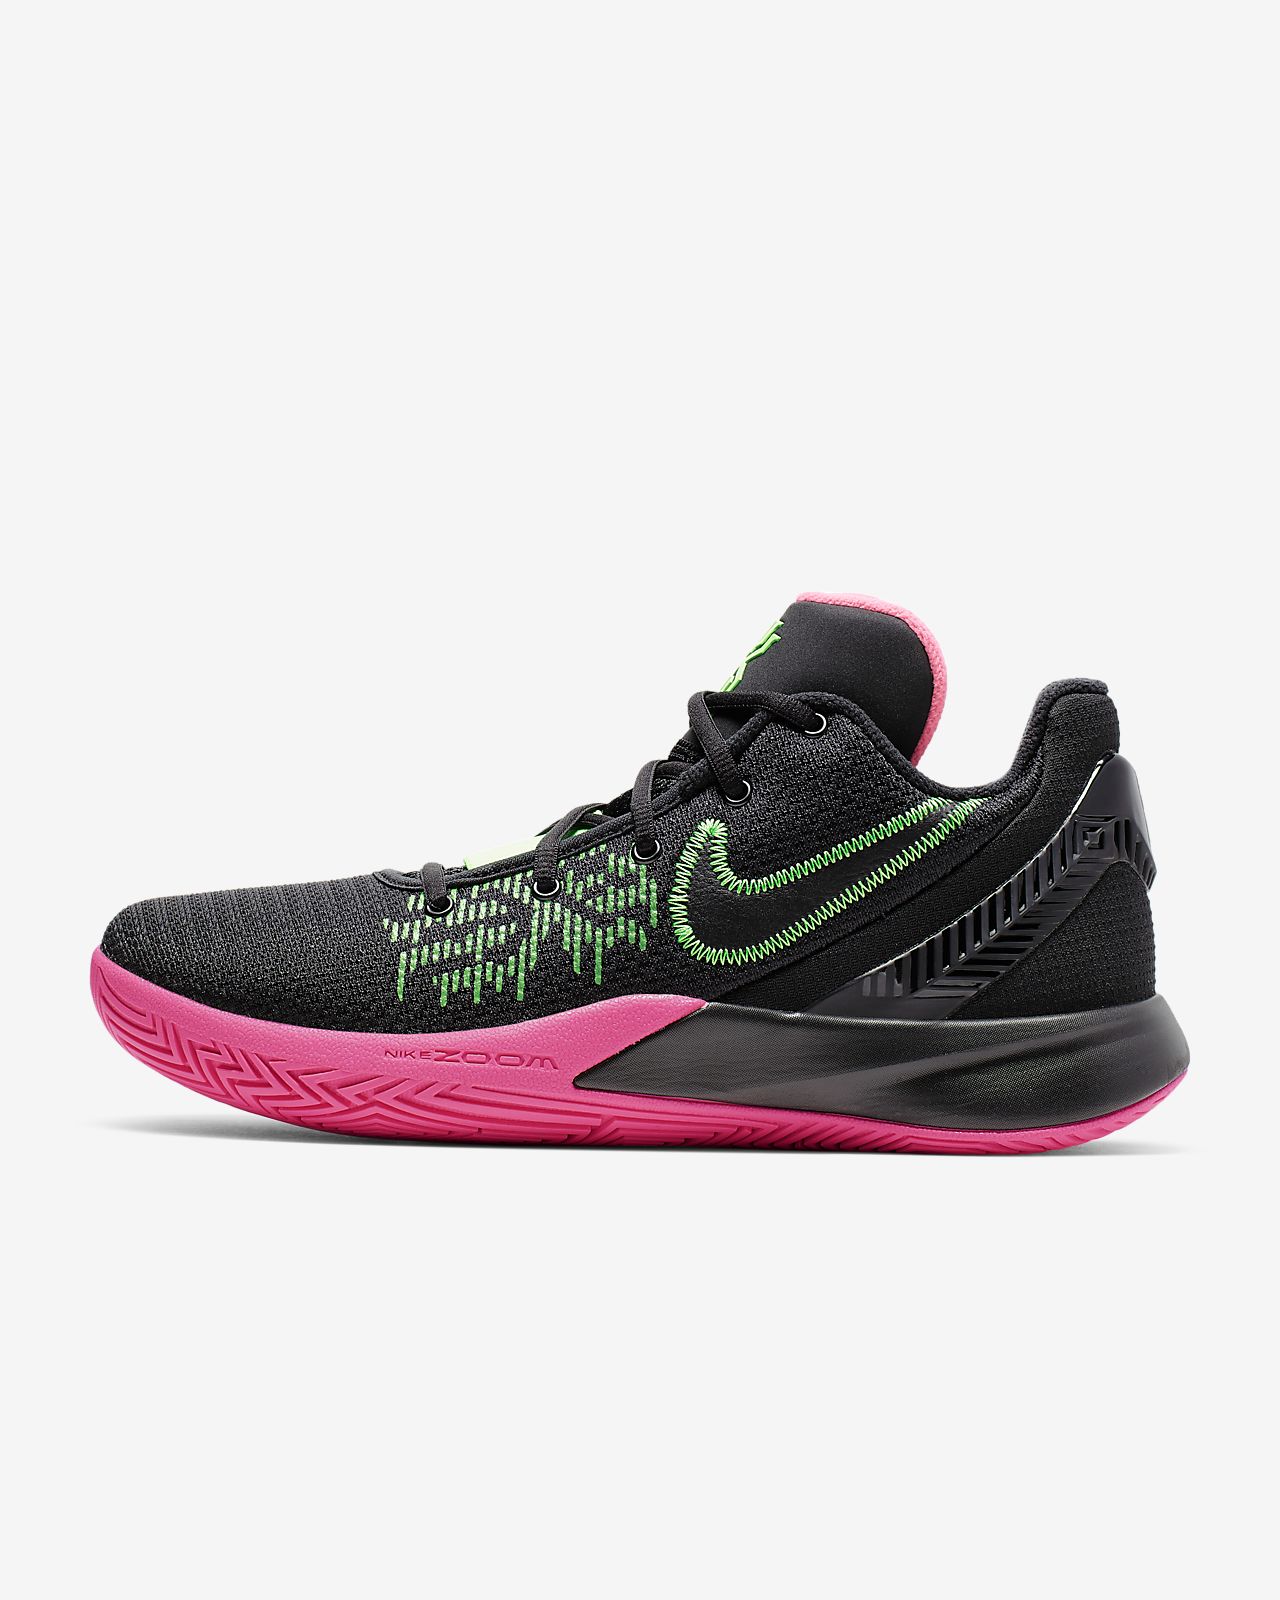 Kyrie Flytrap II Basketball Shoe. Nike AT